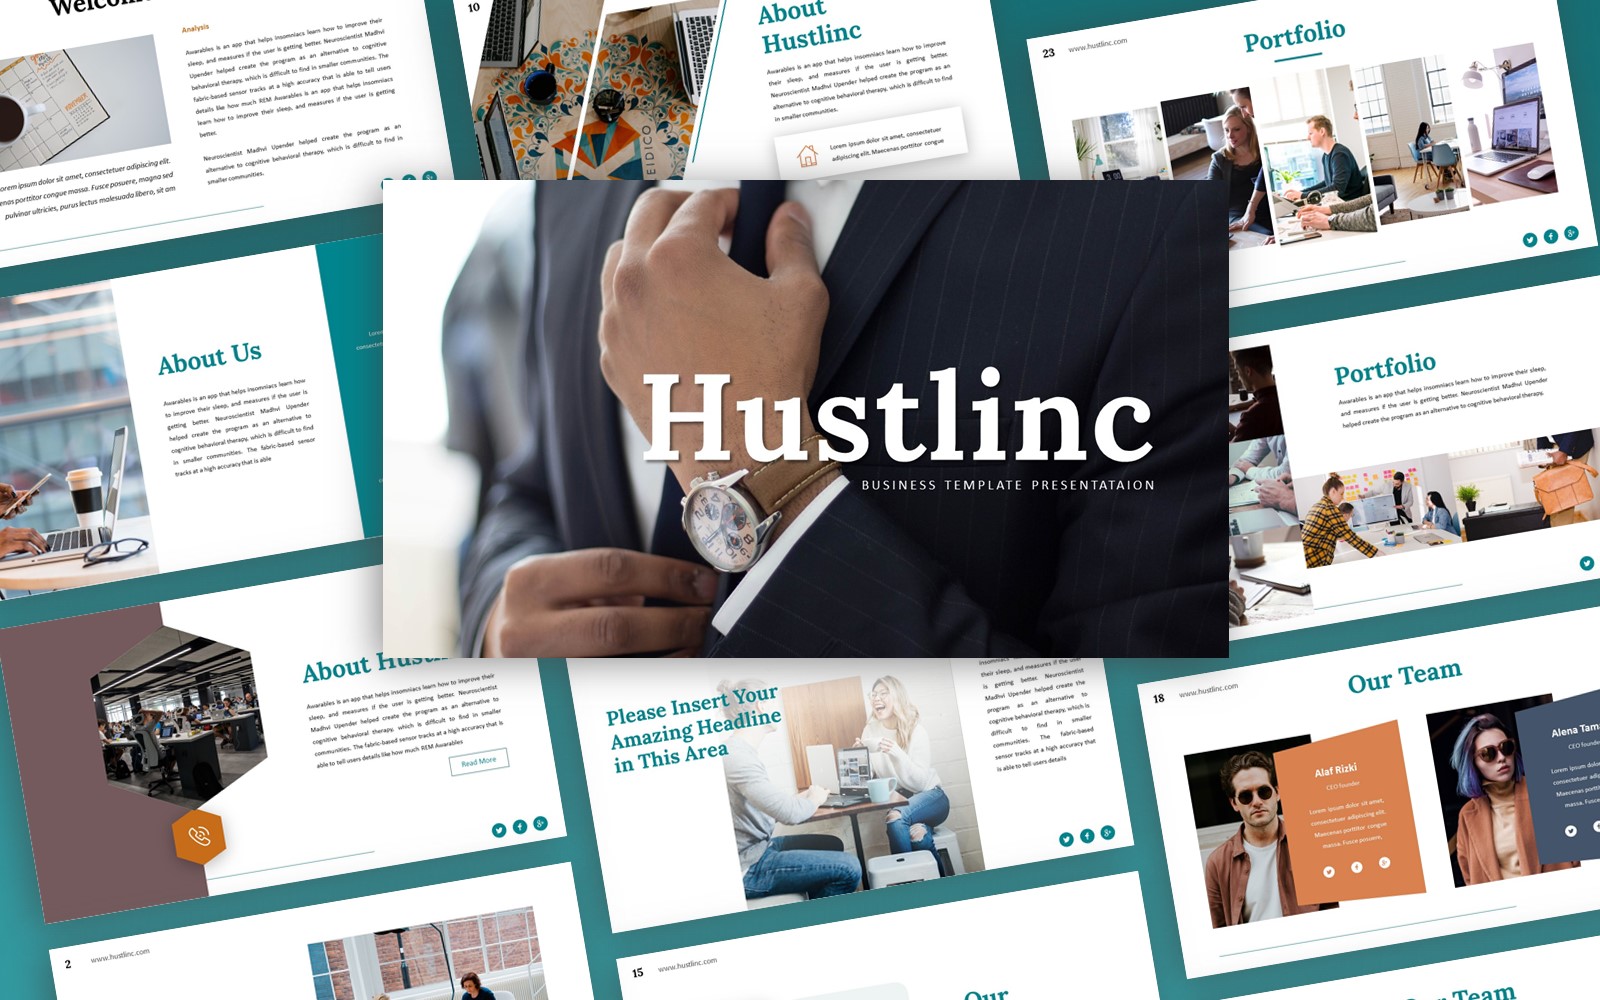 Hustlinc Business Presentation PowerPoint template